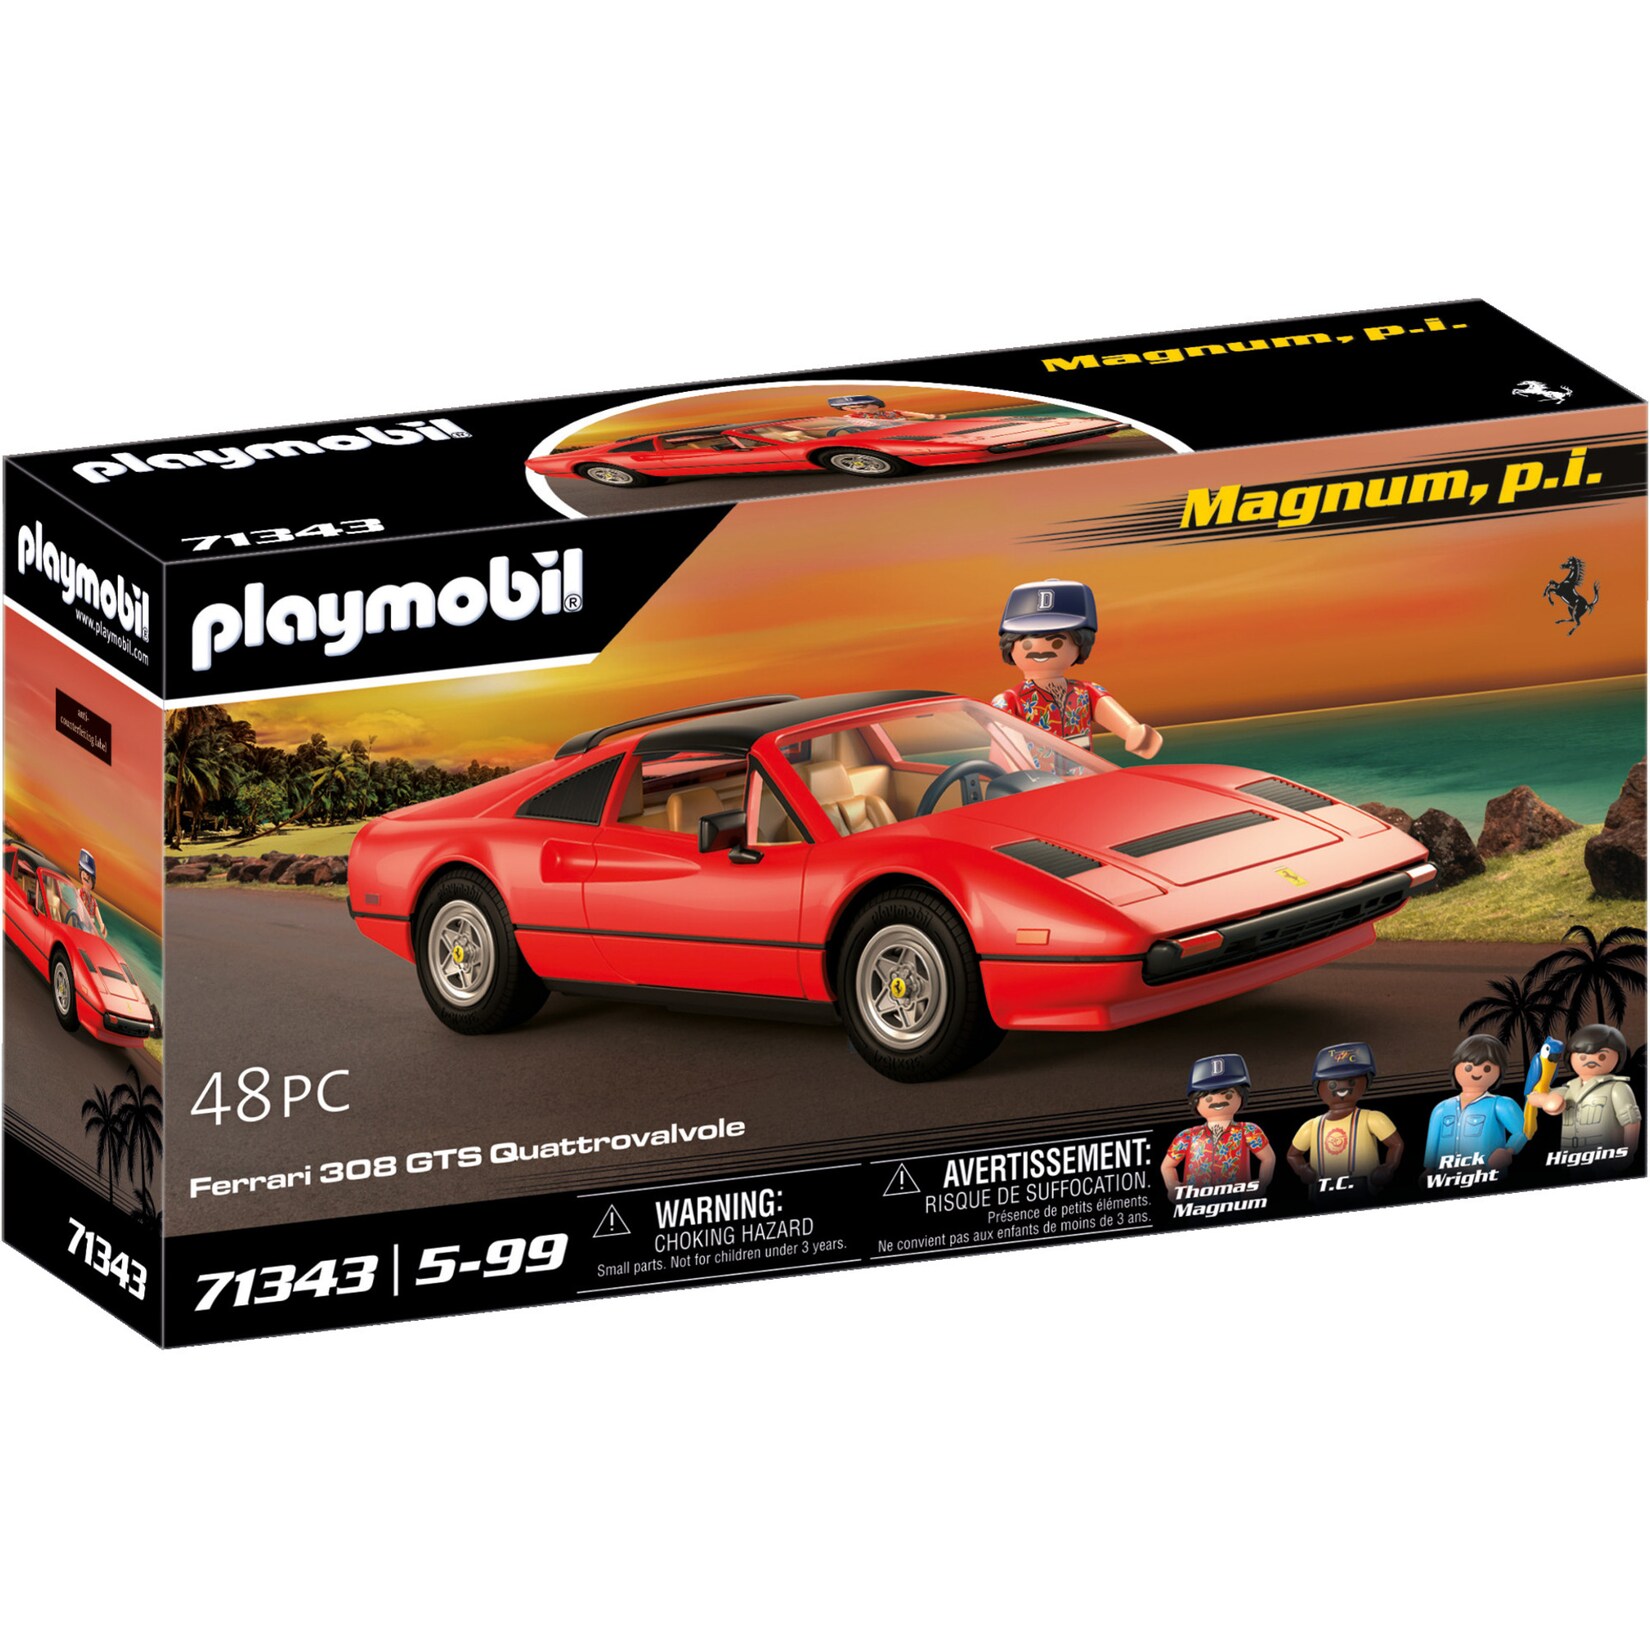 PLAYMOBIL Konstruktionsspielzeug Magnum, p.i. Ferrari 308 GTS Quattrovalve